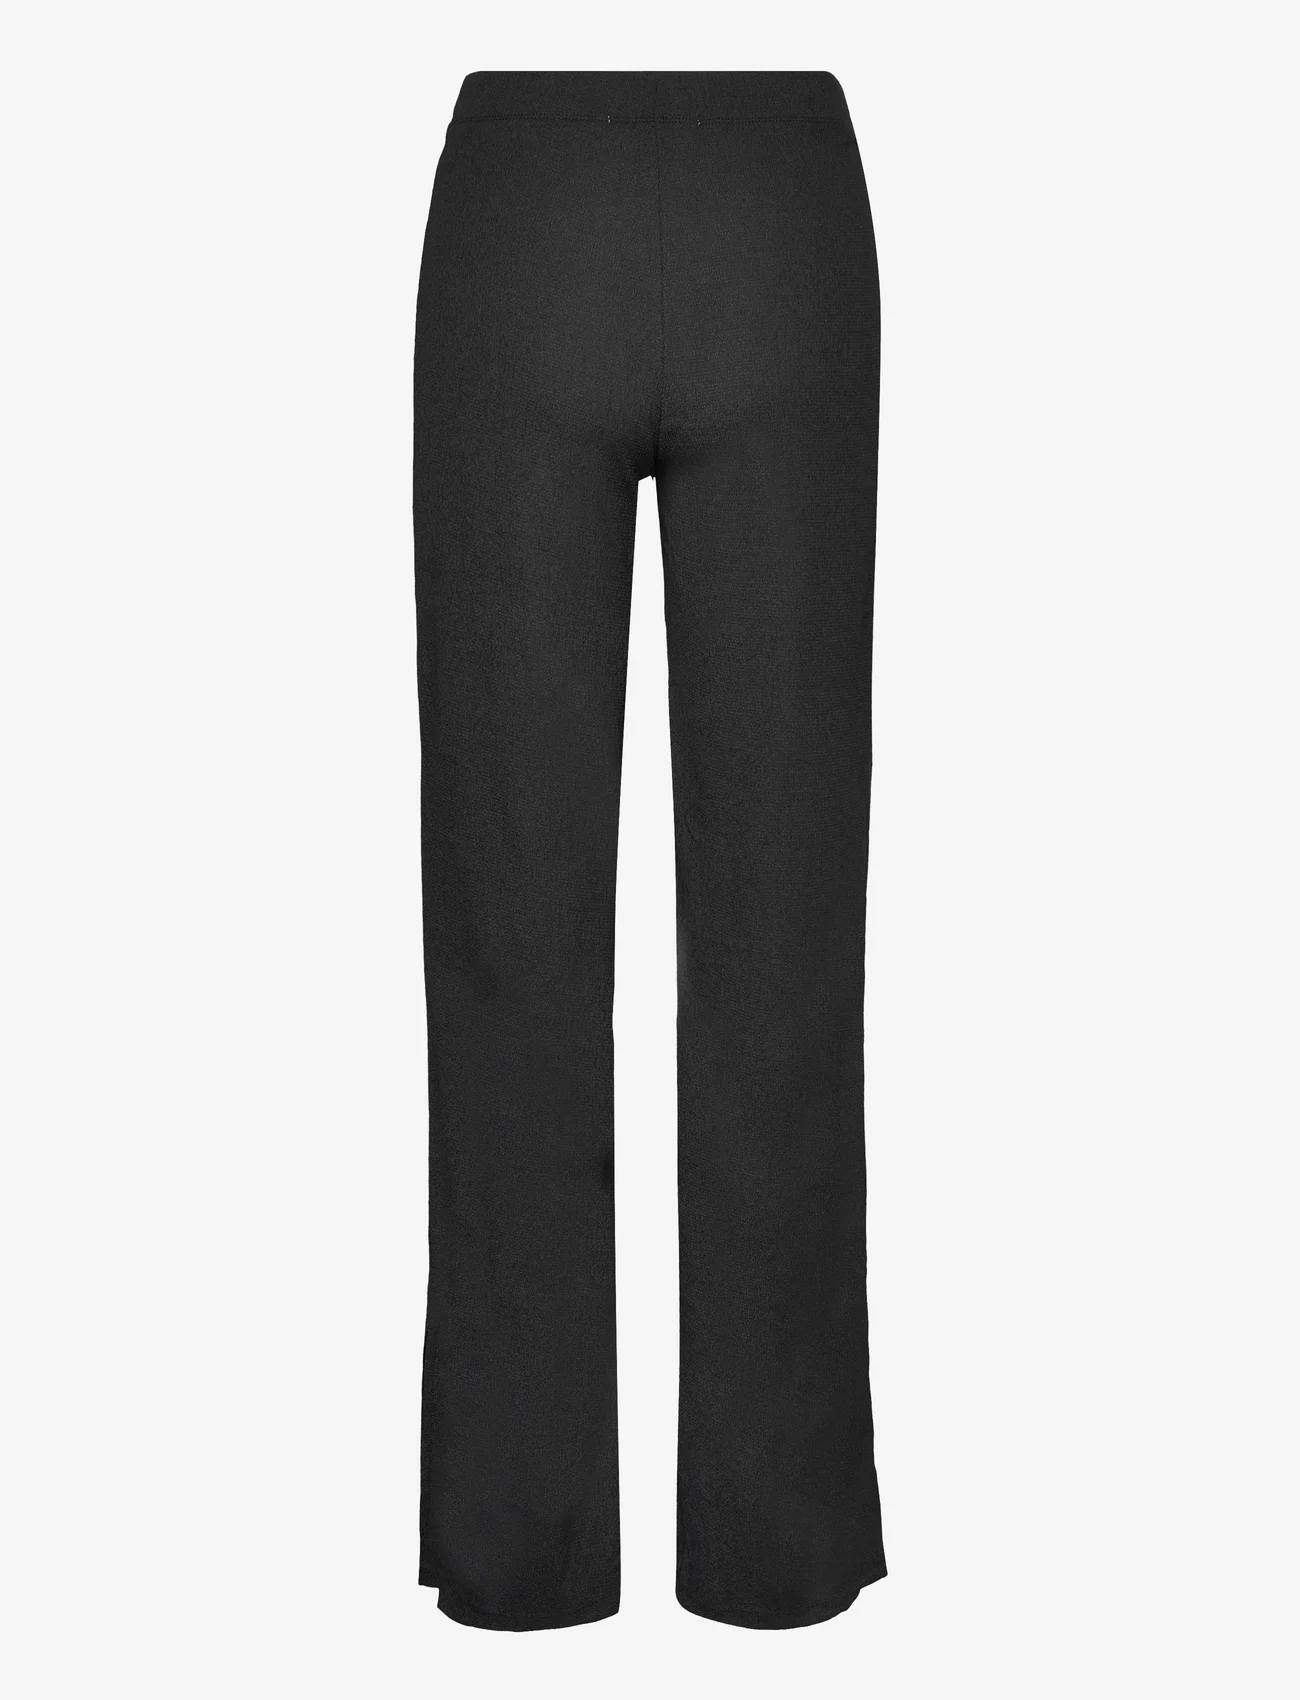 Calvin Klein Jeans - STRAIGHT KNIT PANTS - housut - ck black - 1